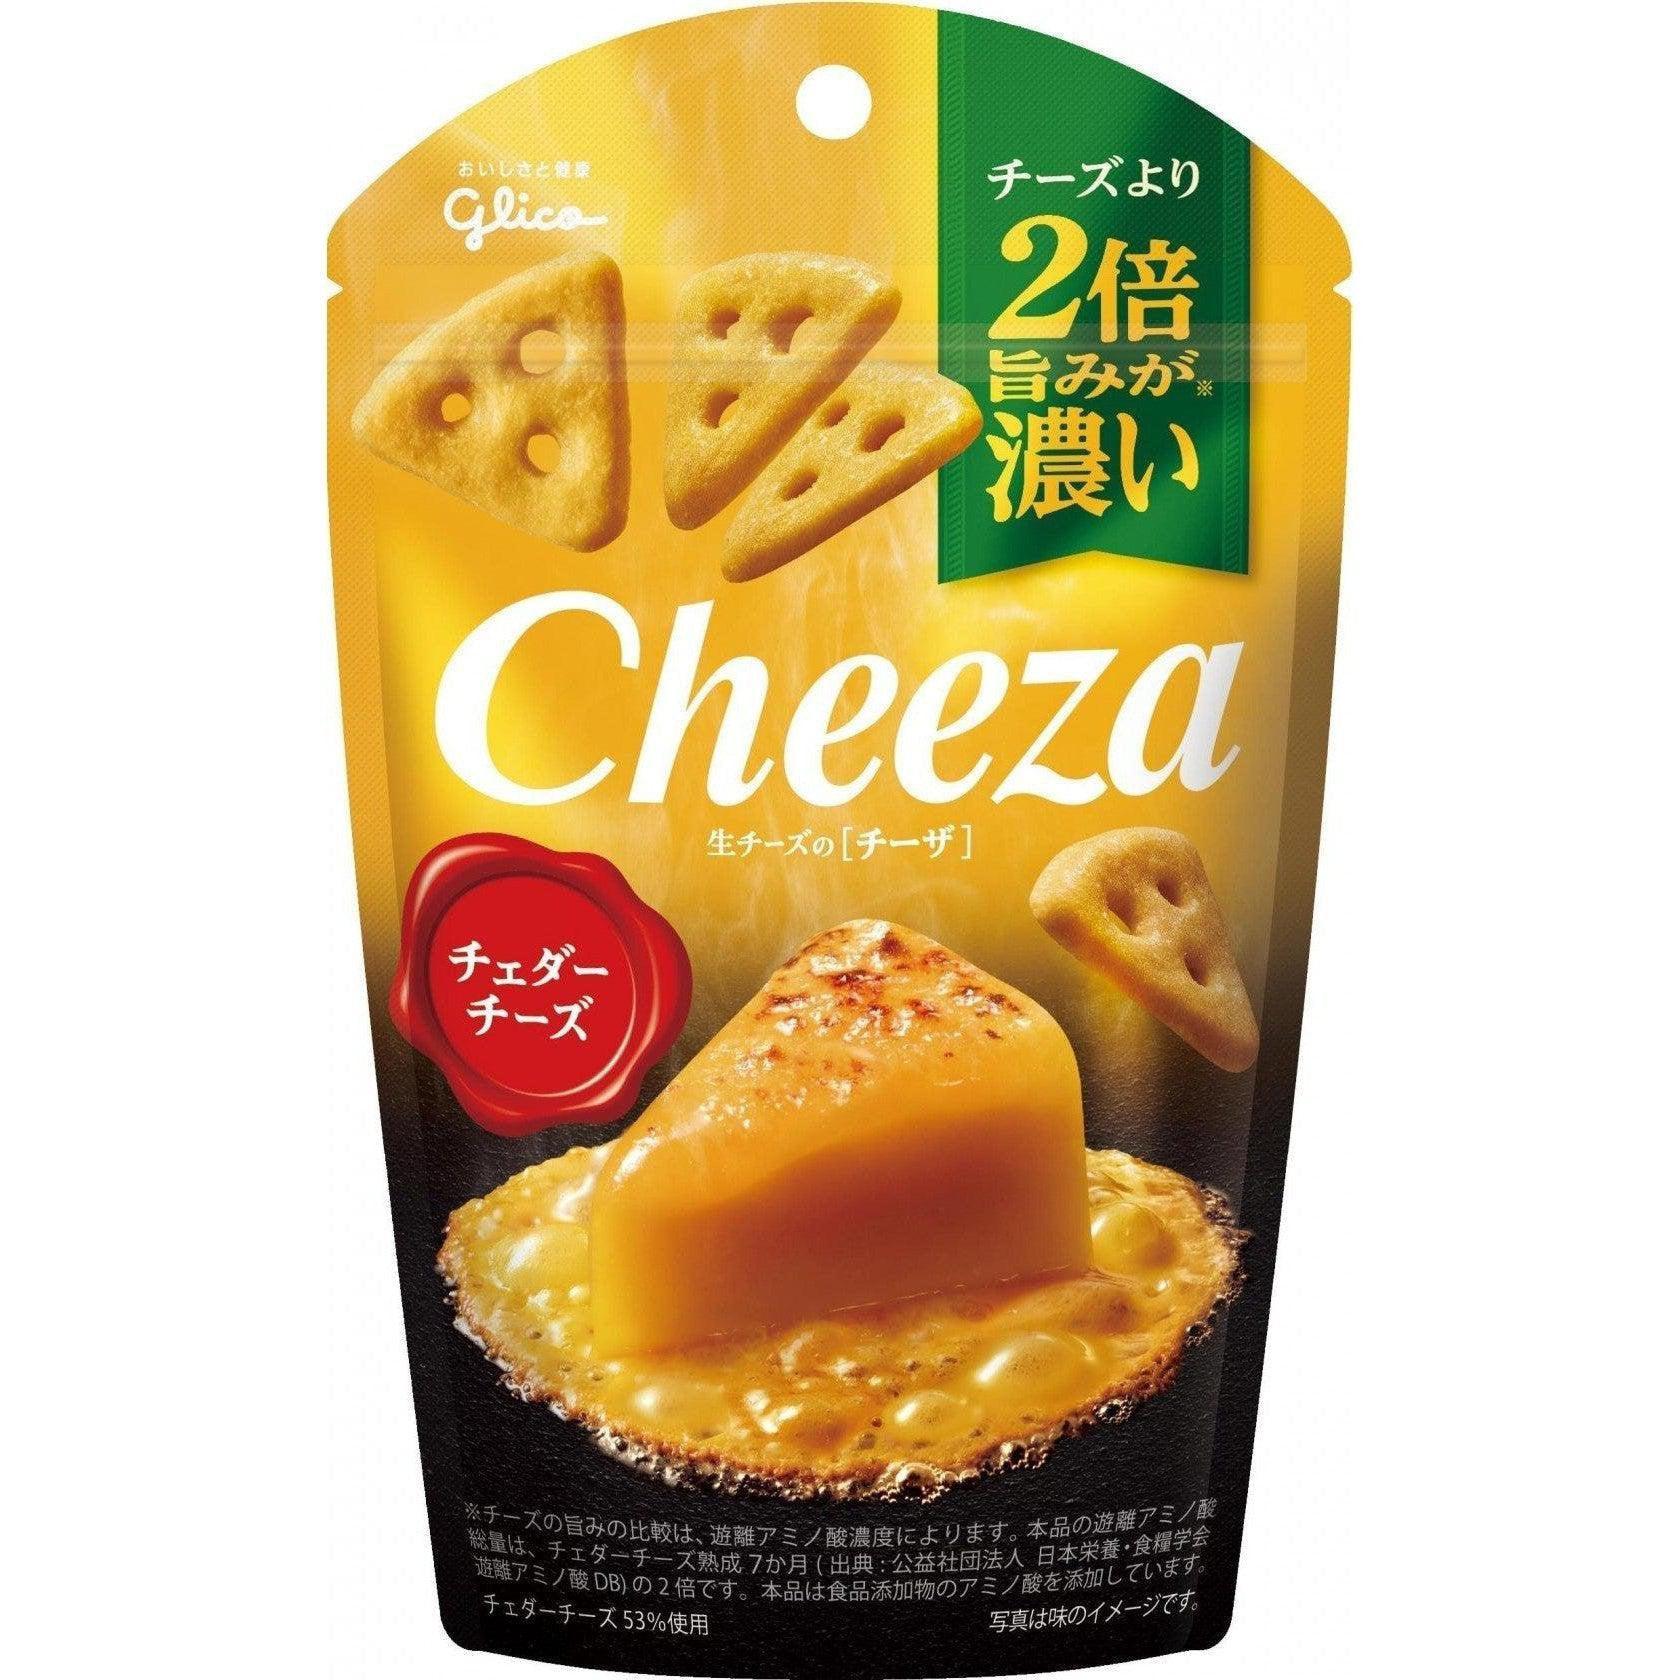 Glico Cheeza Cheddar Cheese Crackers 36g